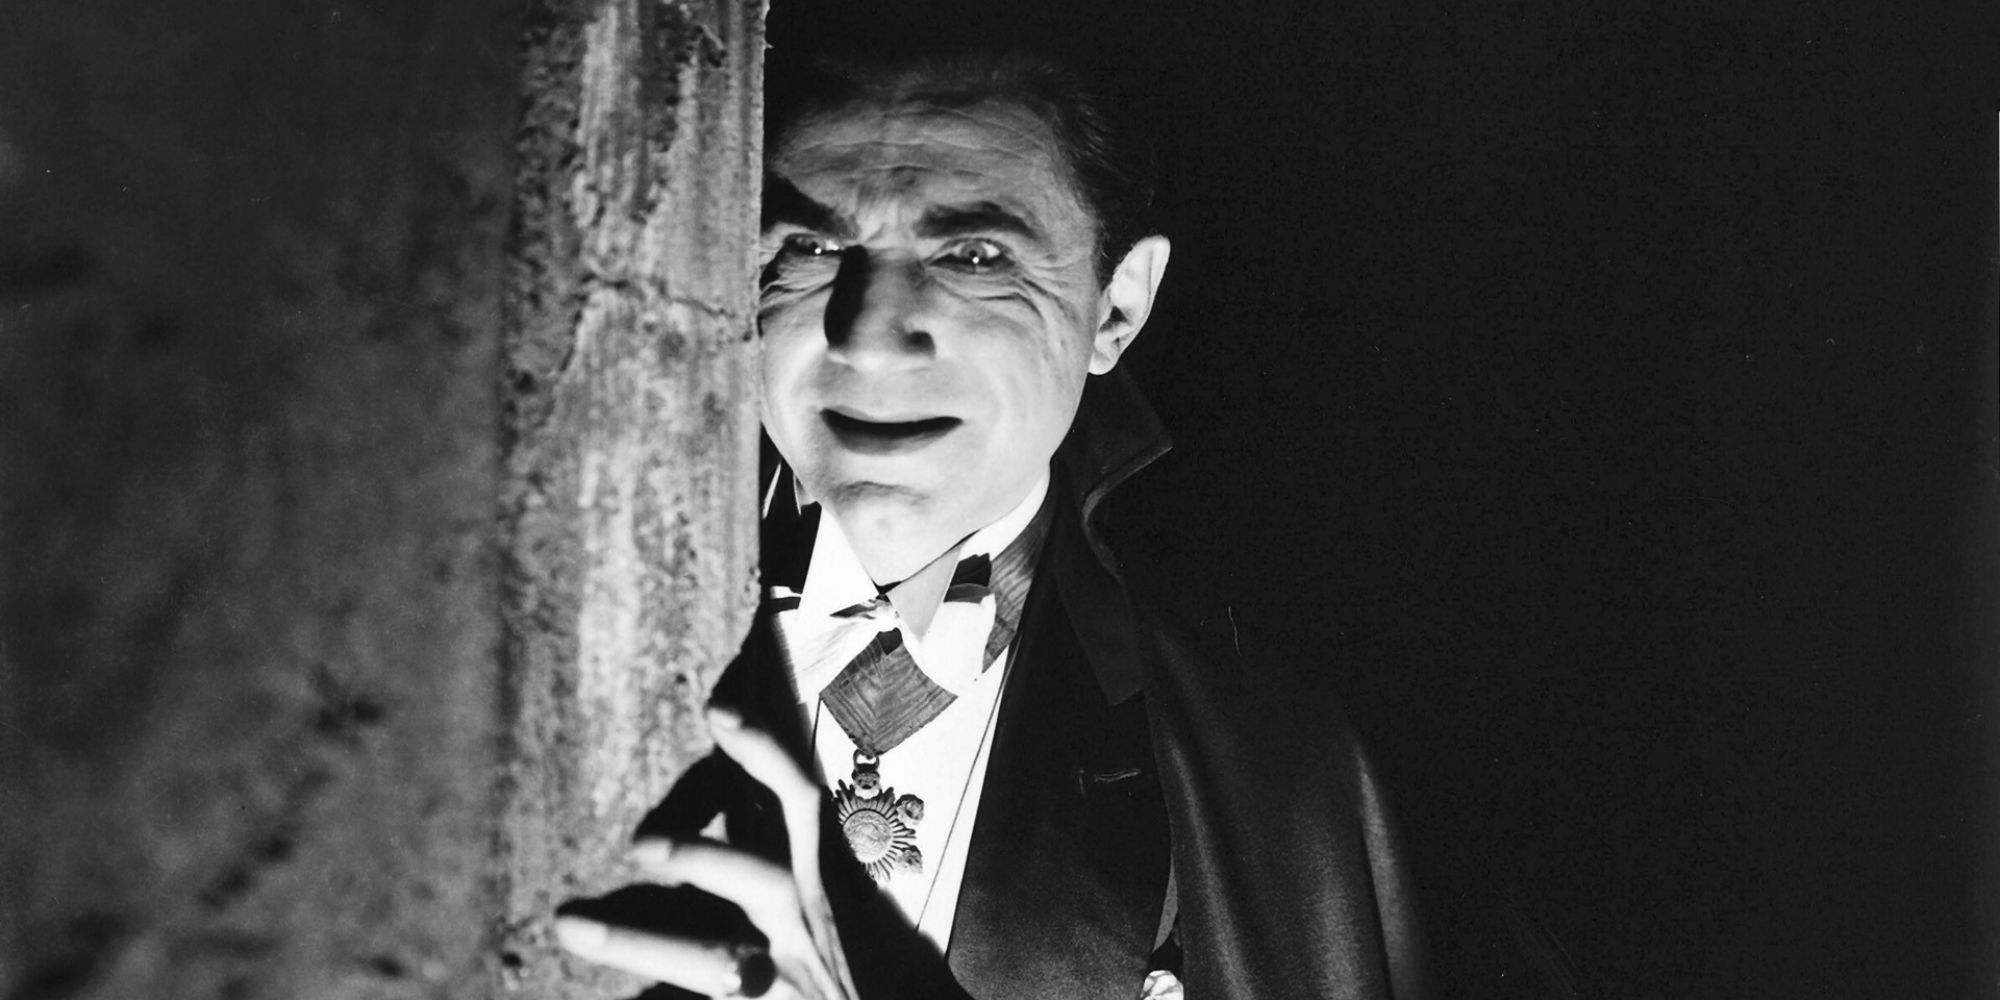 Count Dracula grins menacingly from behind a dark corner